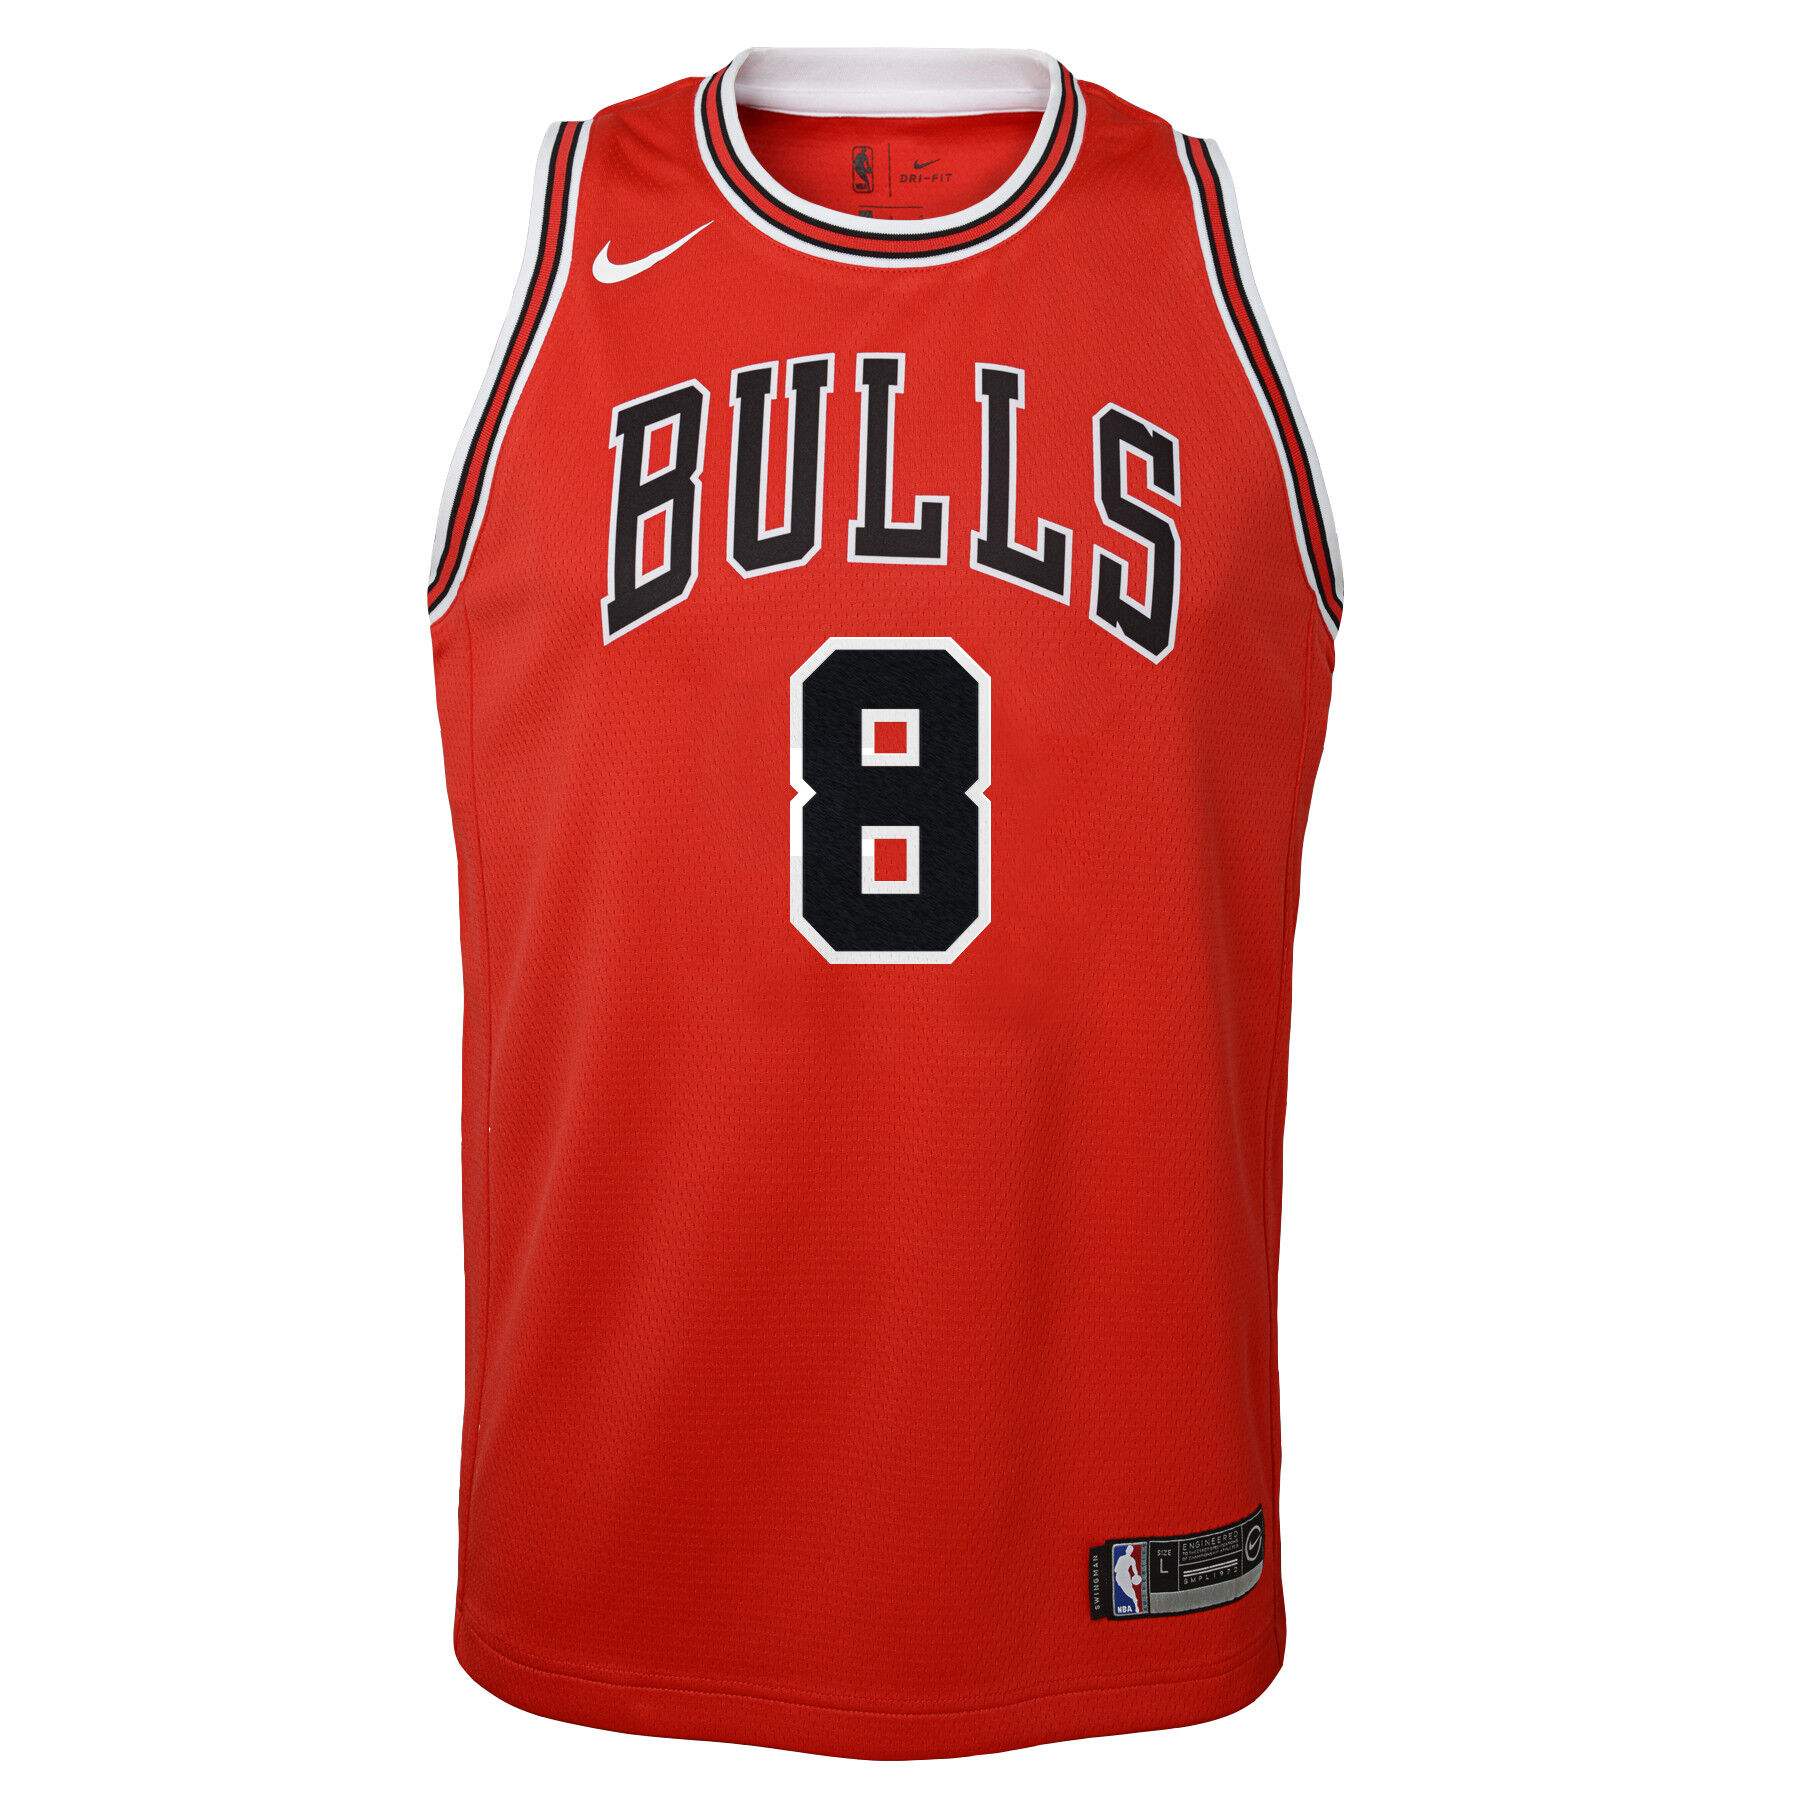 2019 chicago bulls jersey